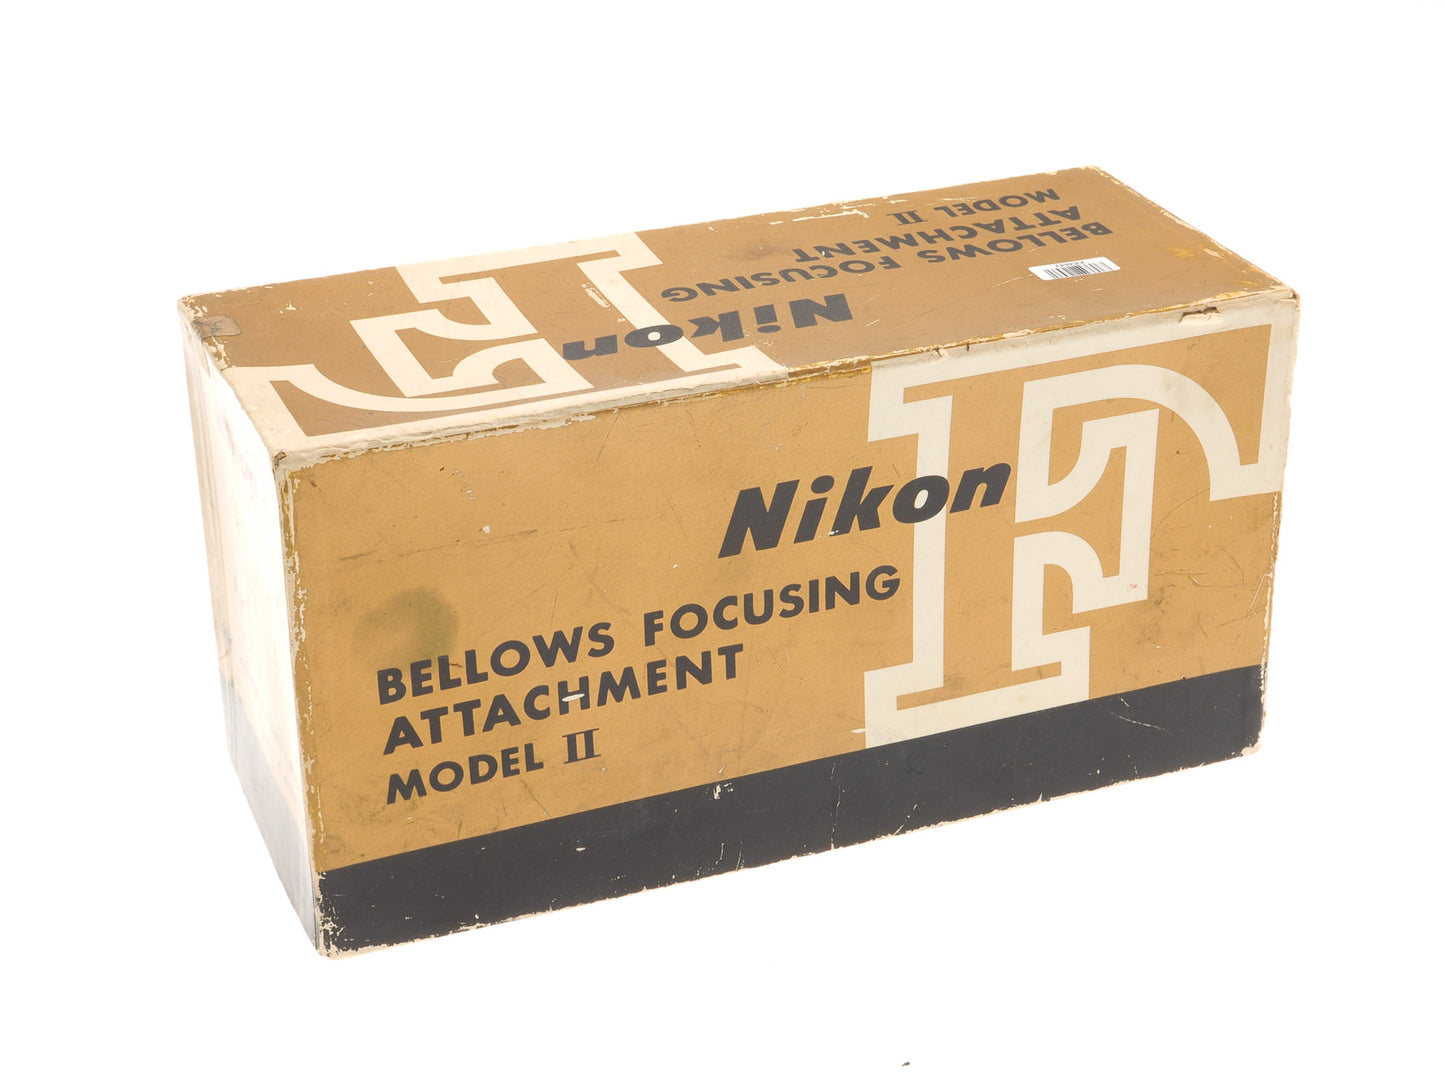 Nikon Bellows Focusing Attachment Model II